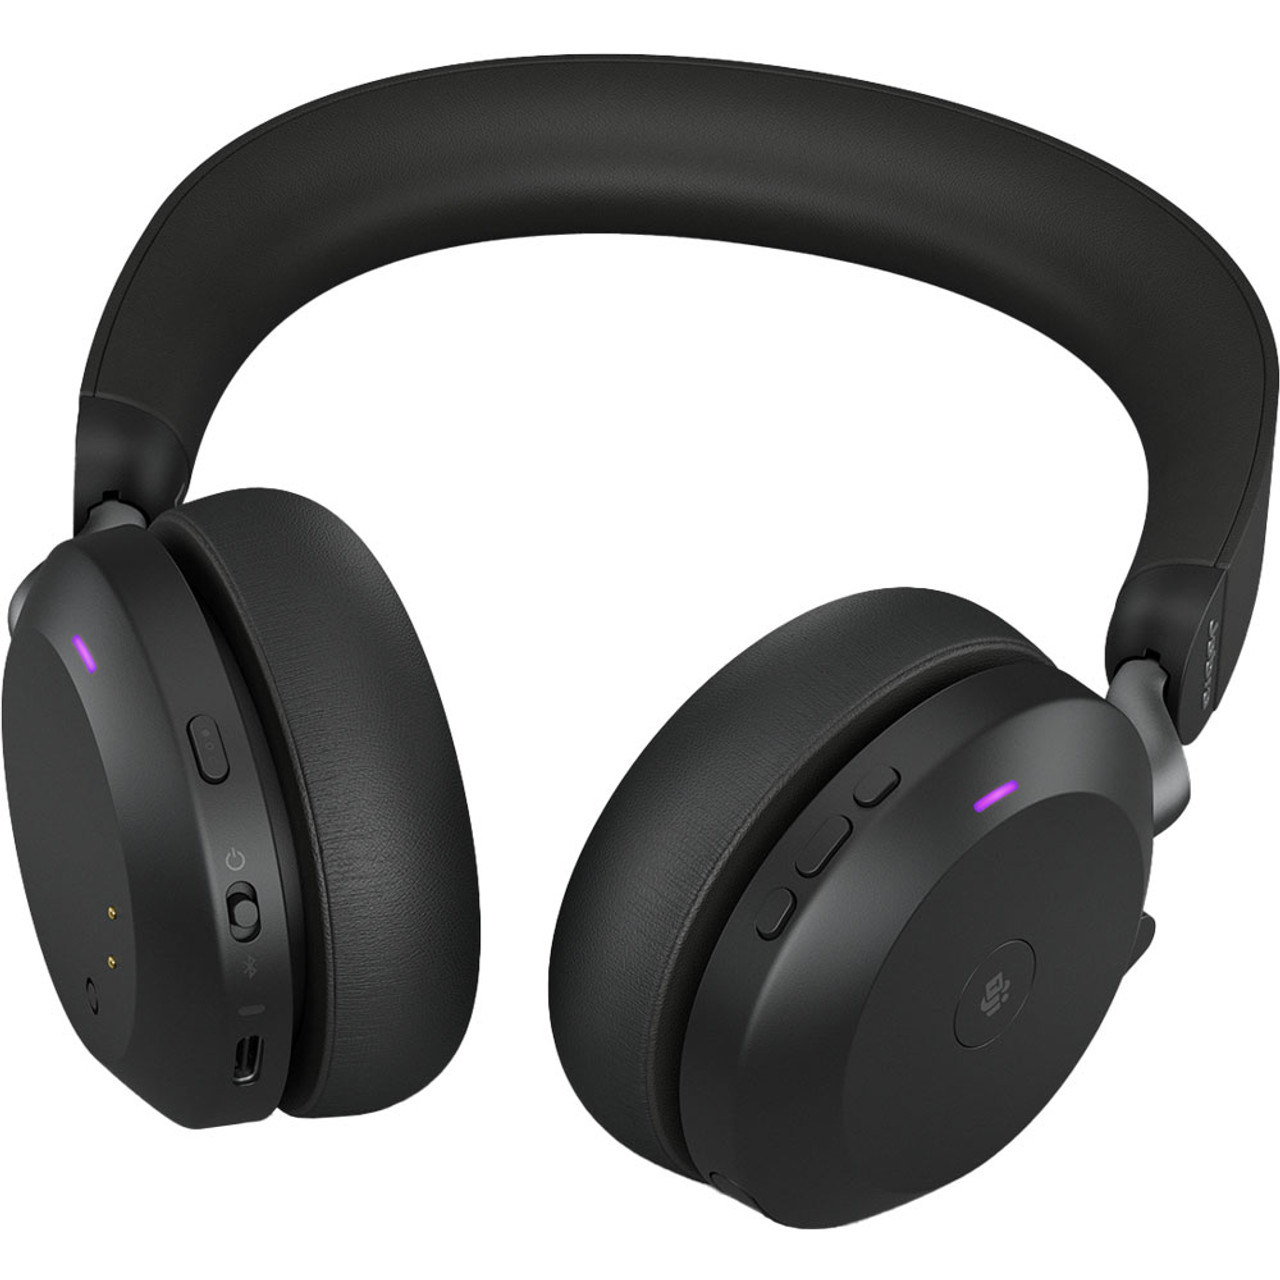 NEW Jabra Evolve2 75 Wireless Headset Review + Mic Test